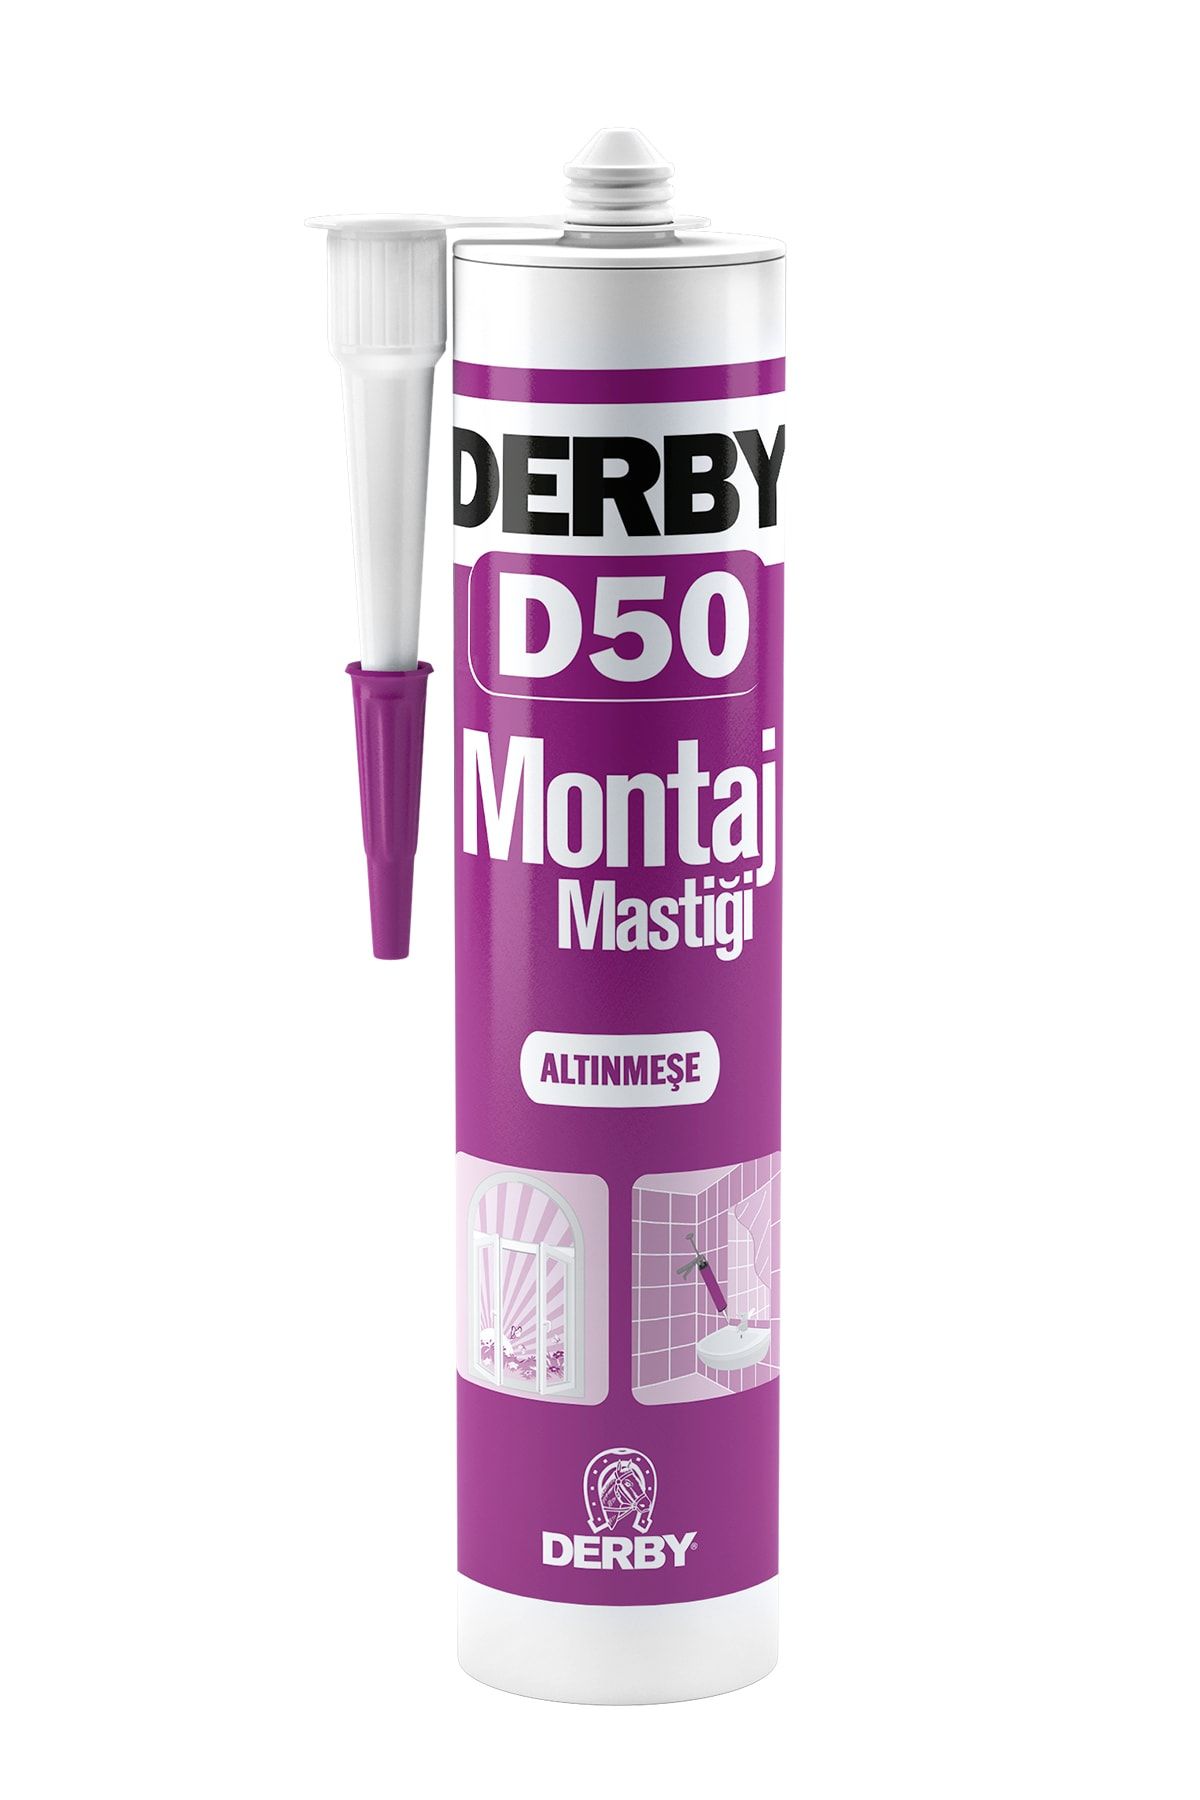 Derby D50 Montaj Mastiği Altınmeşe - 500g